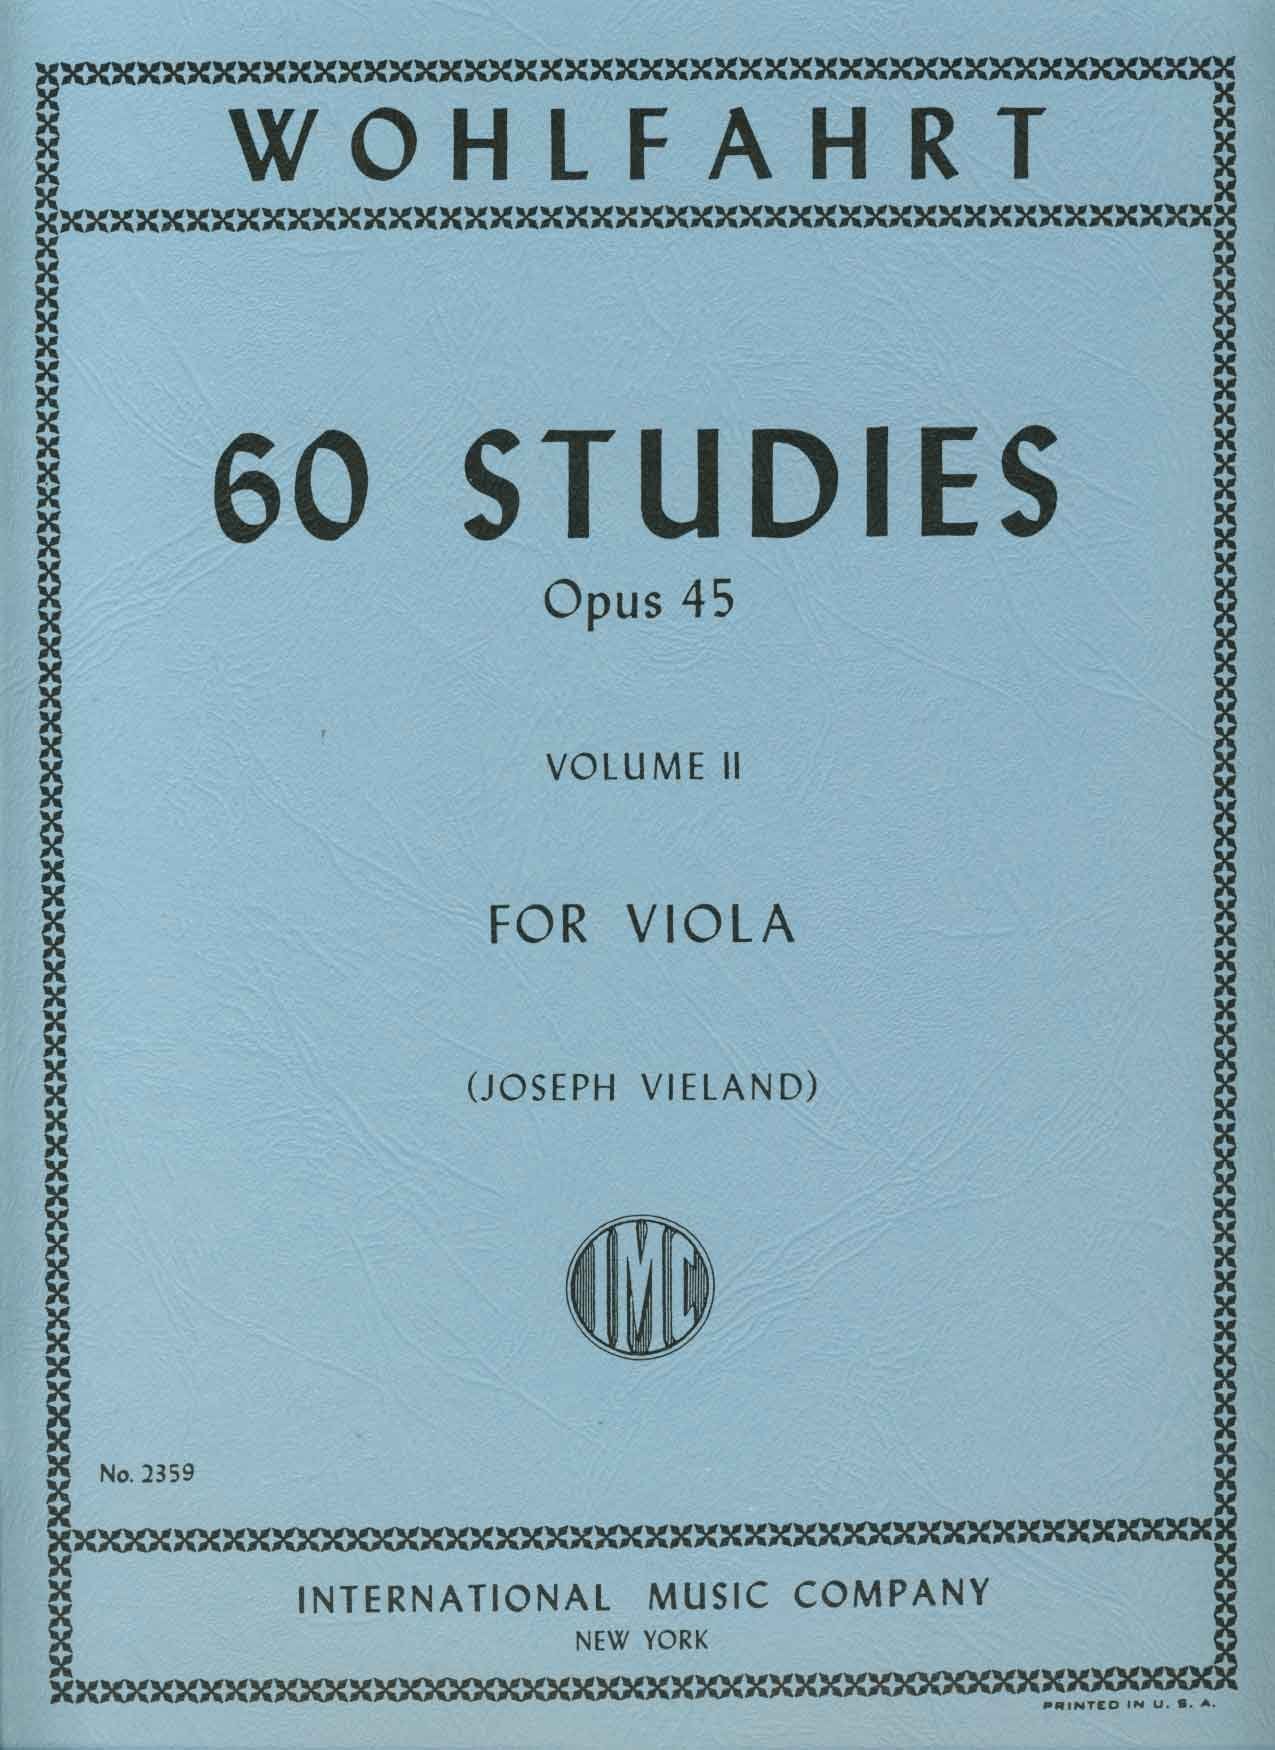 Wohlfahrt 60 Studies, Opus 45: Volume II For Viola